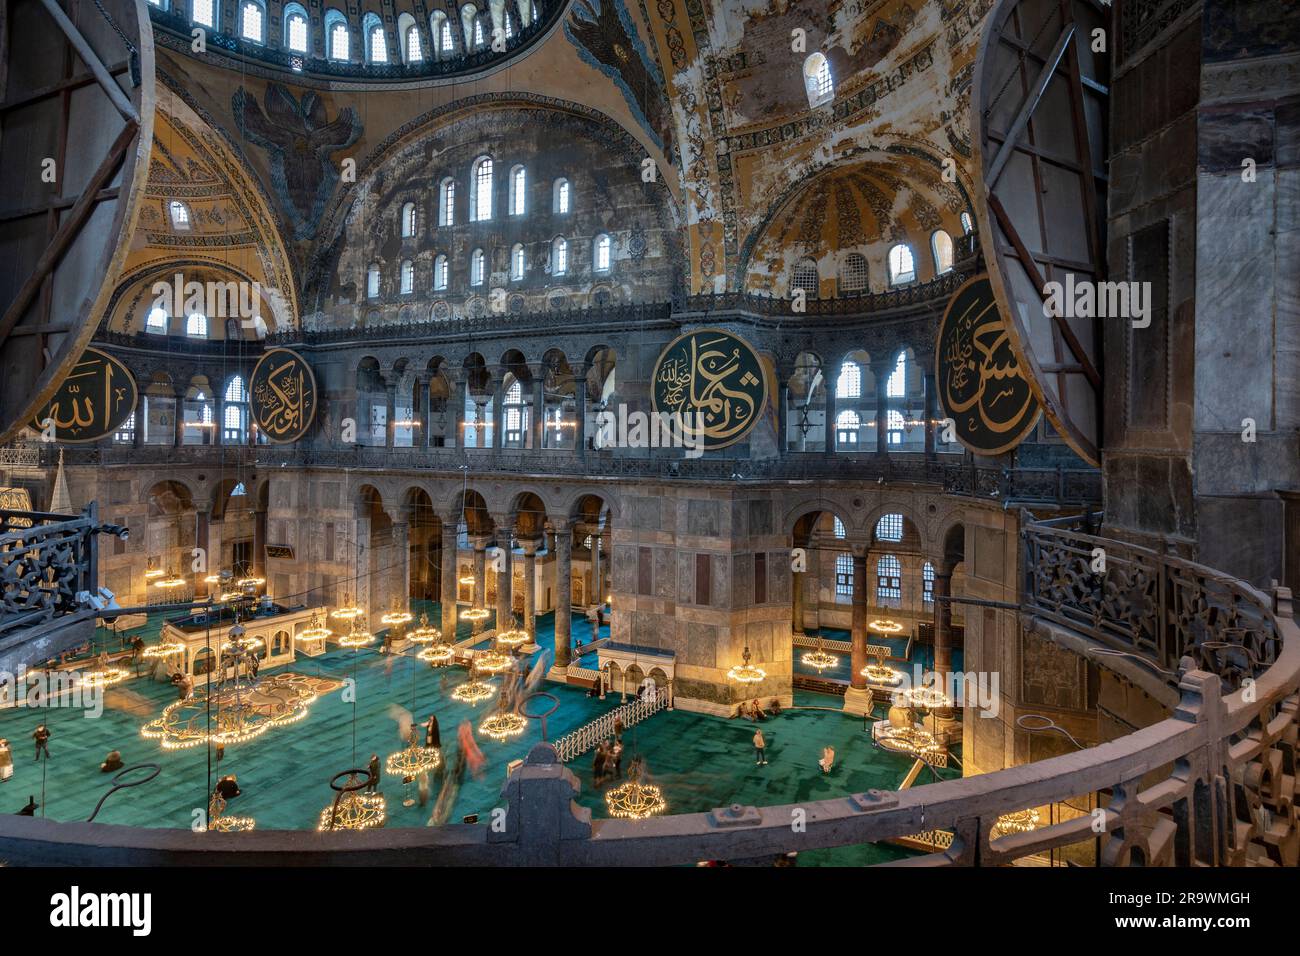 Die Große Moschee Der Hagia Sophia (Ayasofya Camii), Istanbul, Türkei Stockfoto